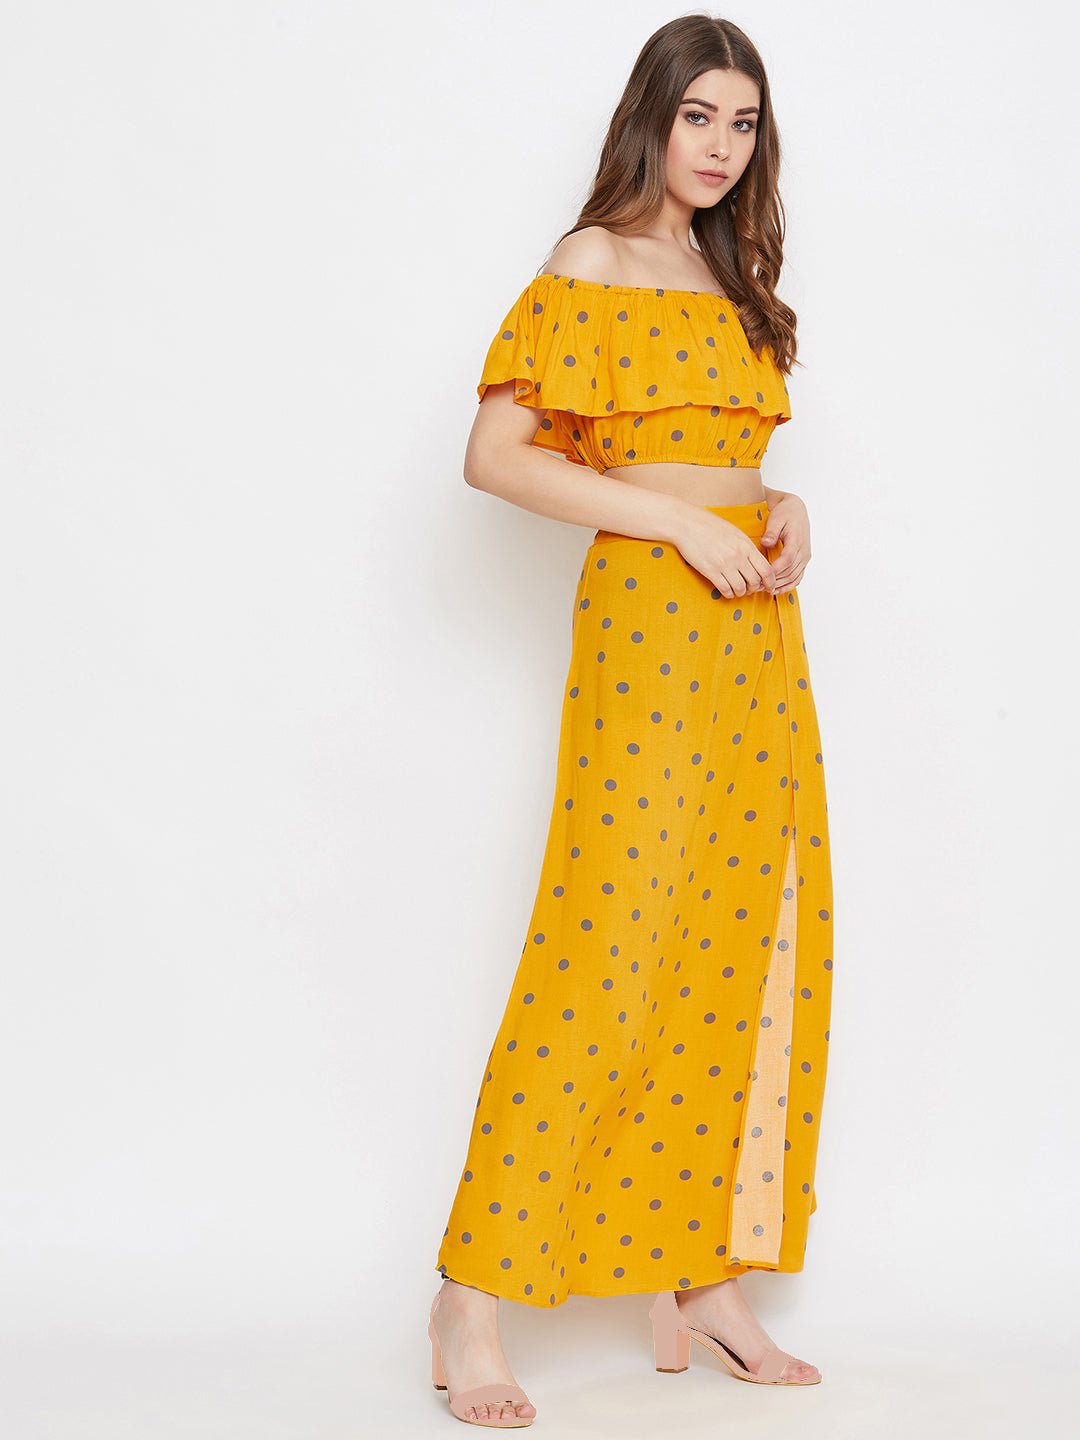 Folk Republic Women Yellow Polka Dot Printed Off-Shoulder Co-Ordinate Maxi Dress - #folk republic#